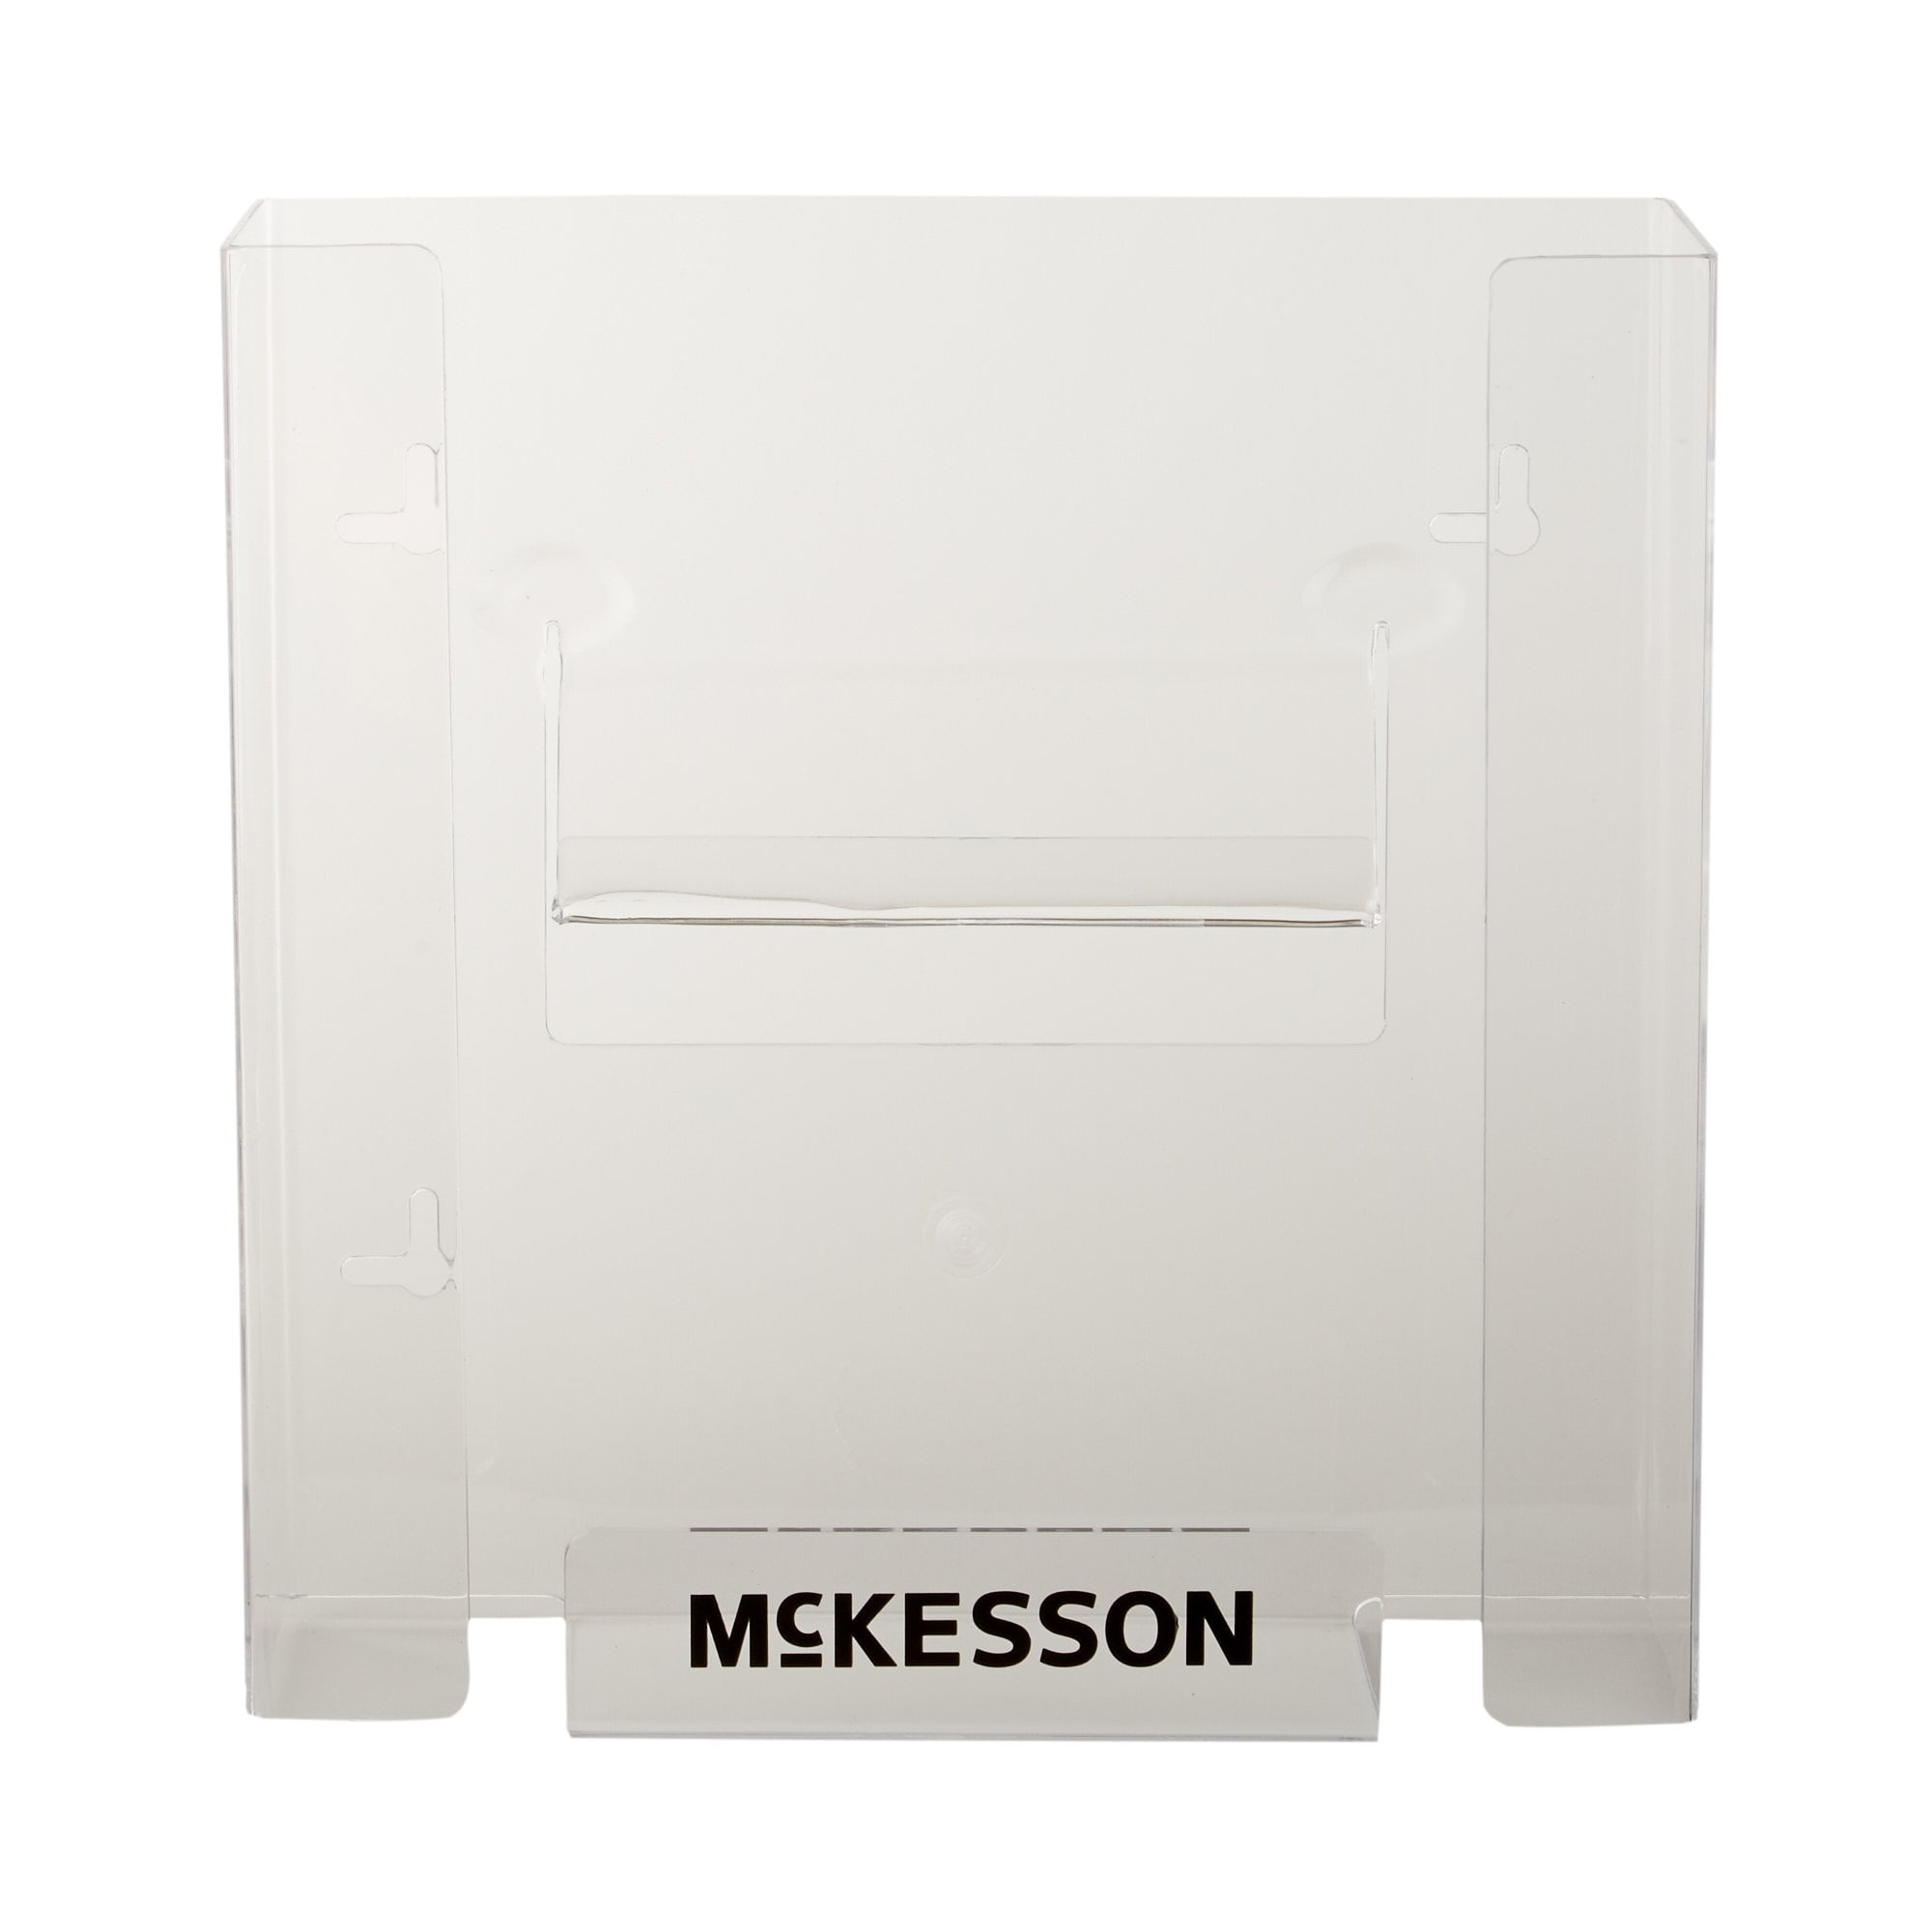 McKesson Glove Box Holder Clear Plastic 2-Box Capacity 16-6532 1 Each 